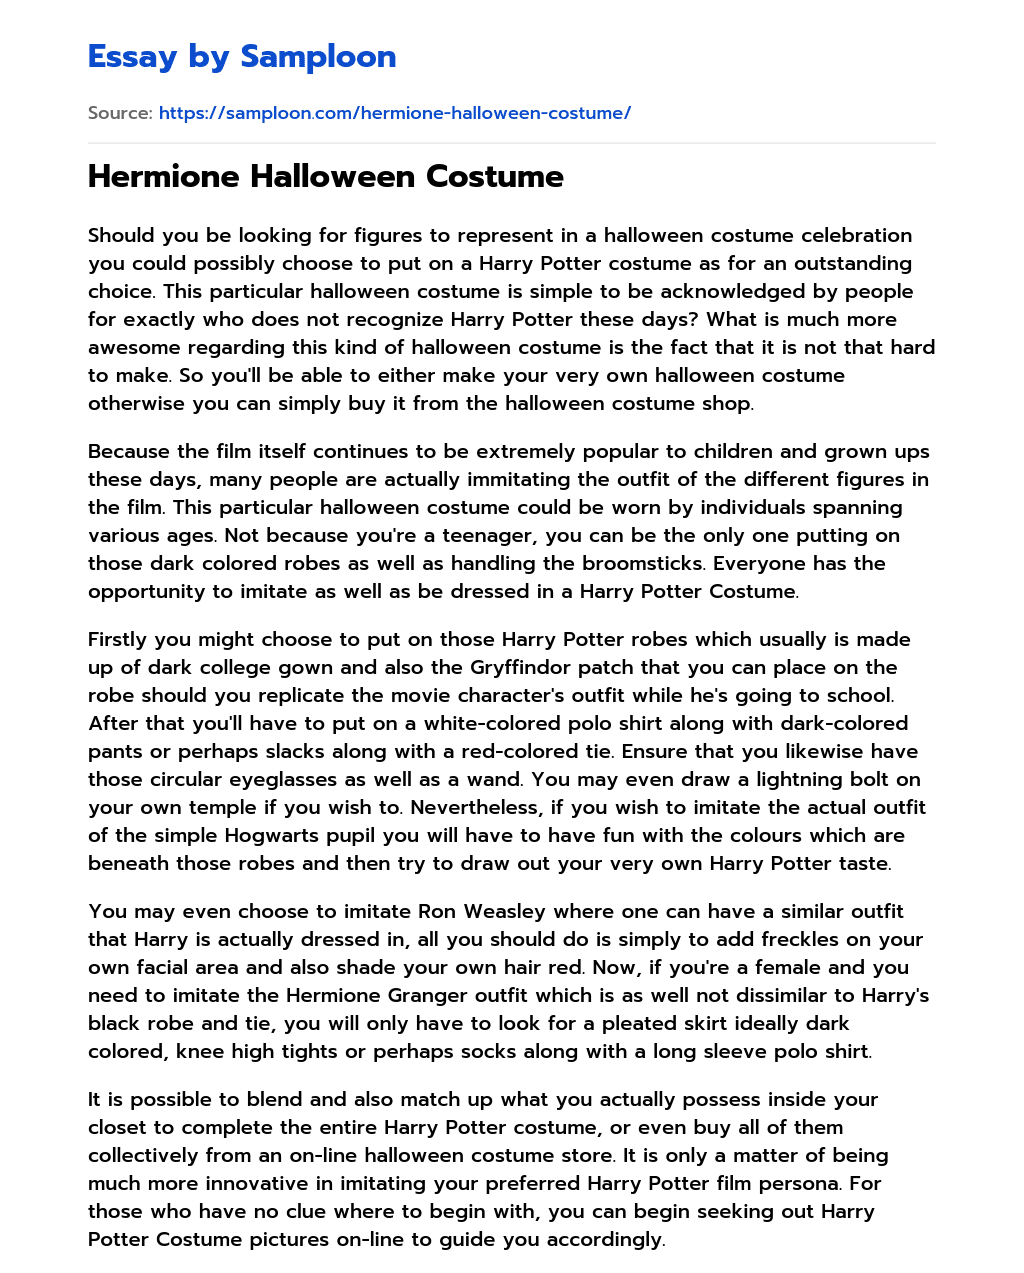 Hermione Halloween Costume essay